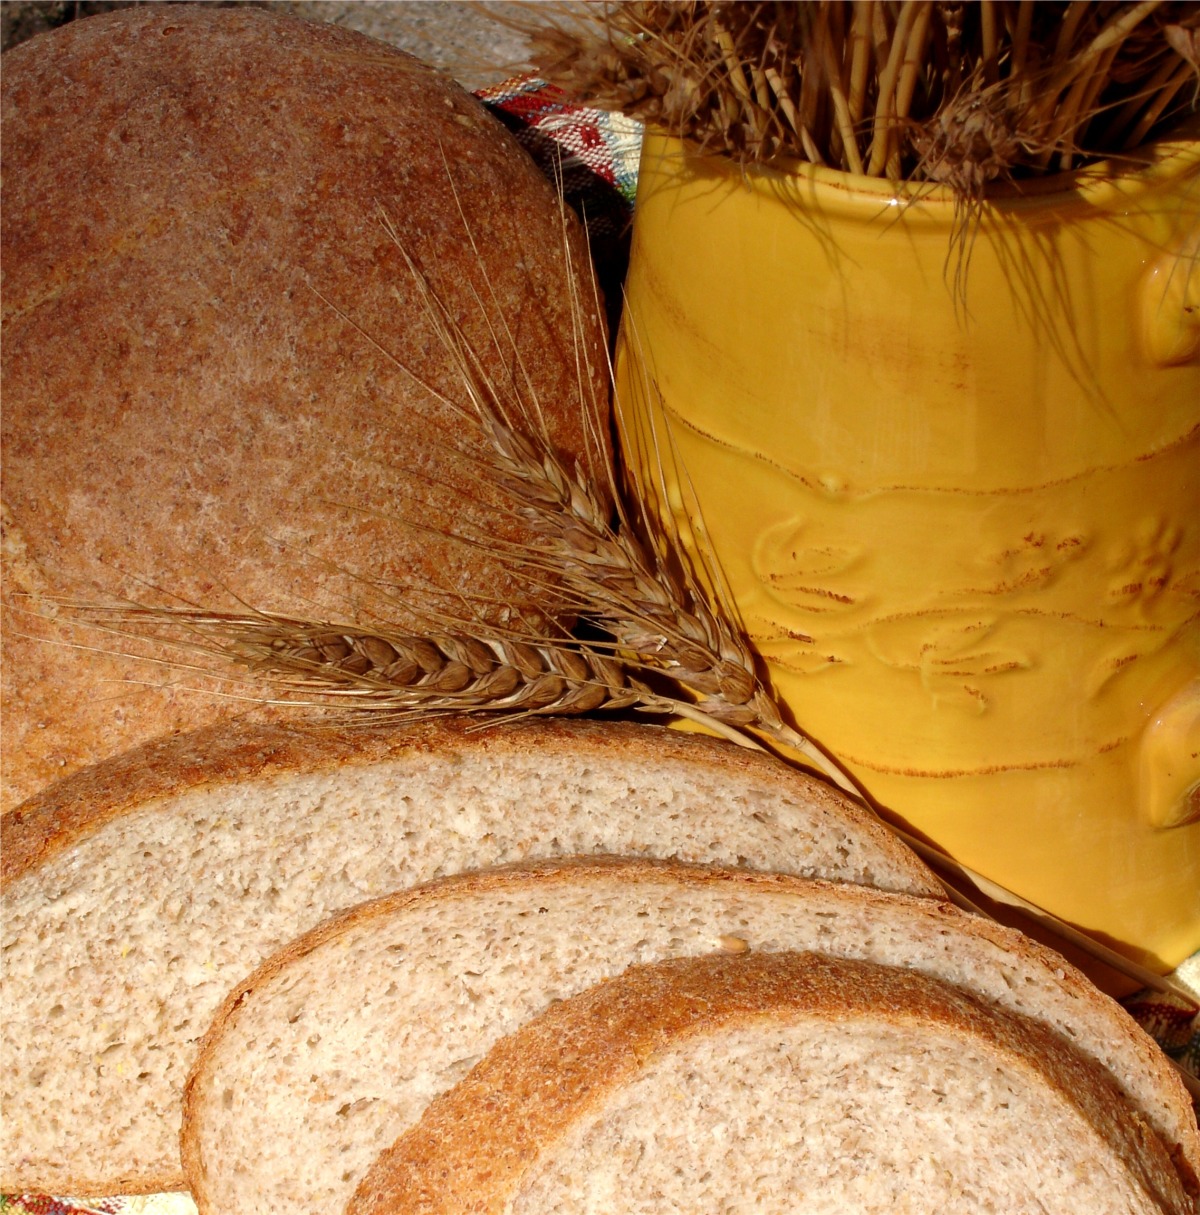 Bauernbrot (German Farmer Bread) image